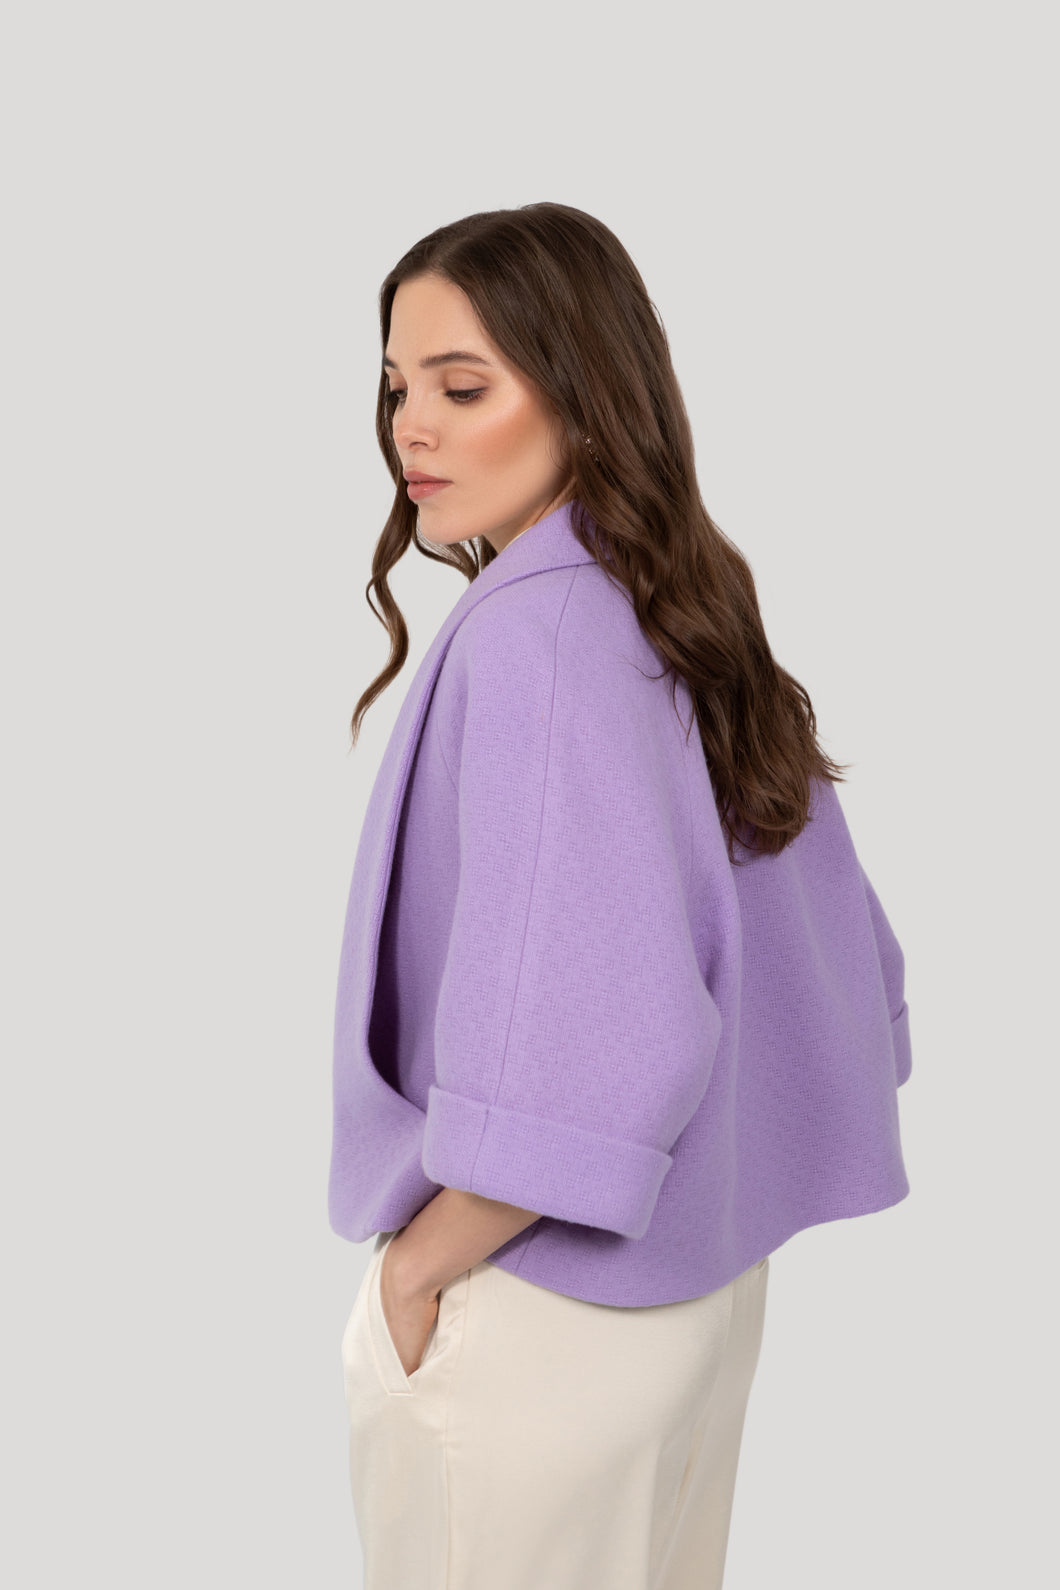 Estelle Cape Jacket - Lilac Vintage Wool - Made to Order